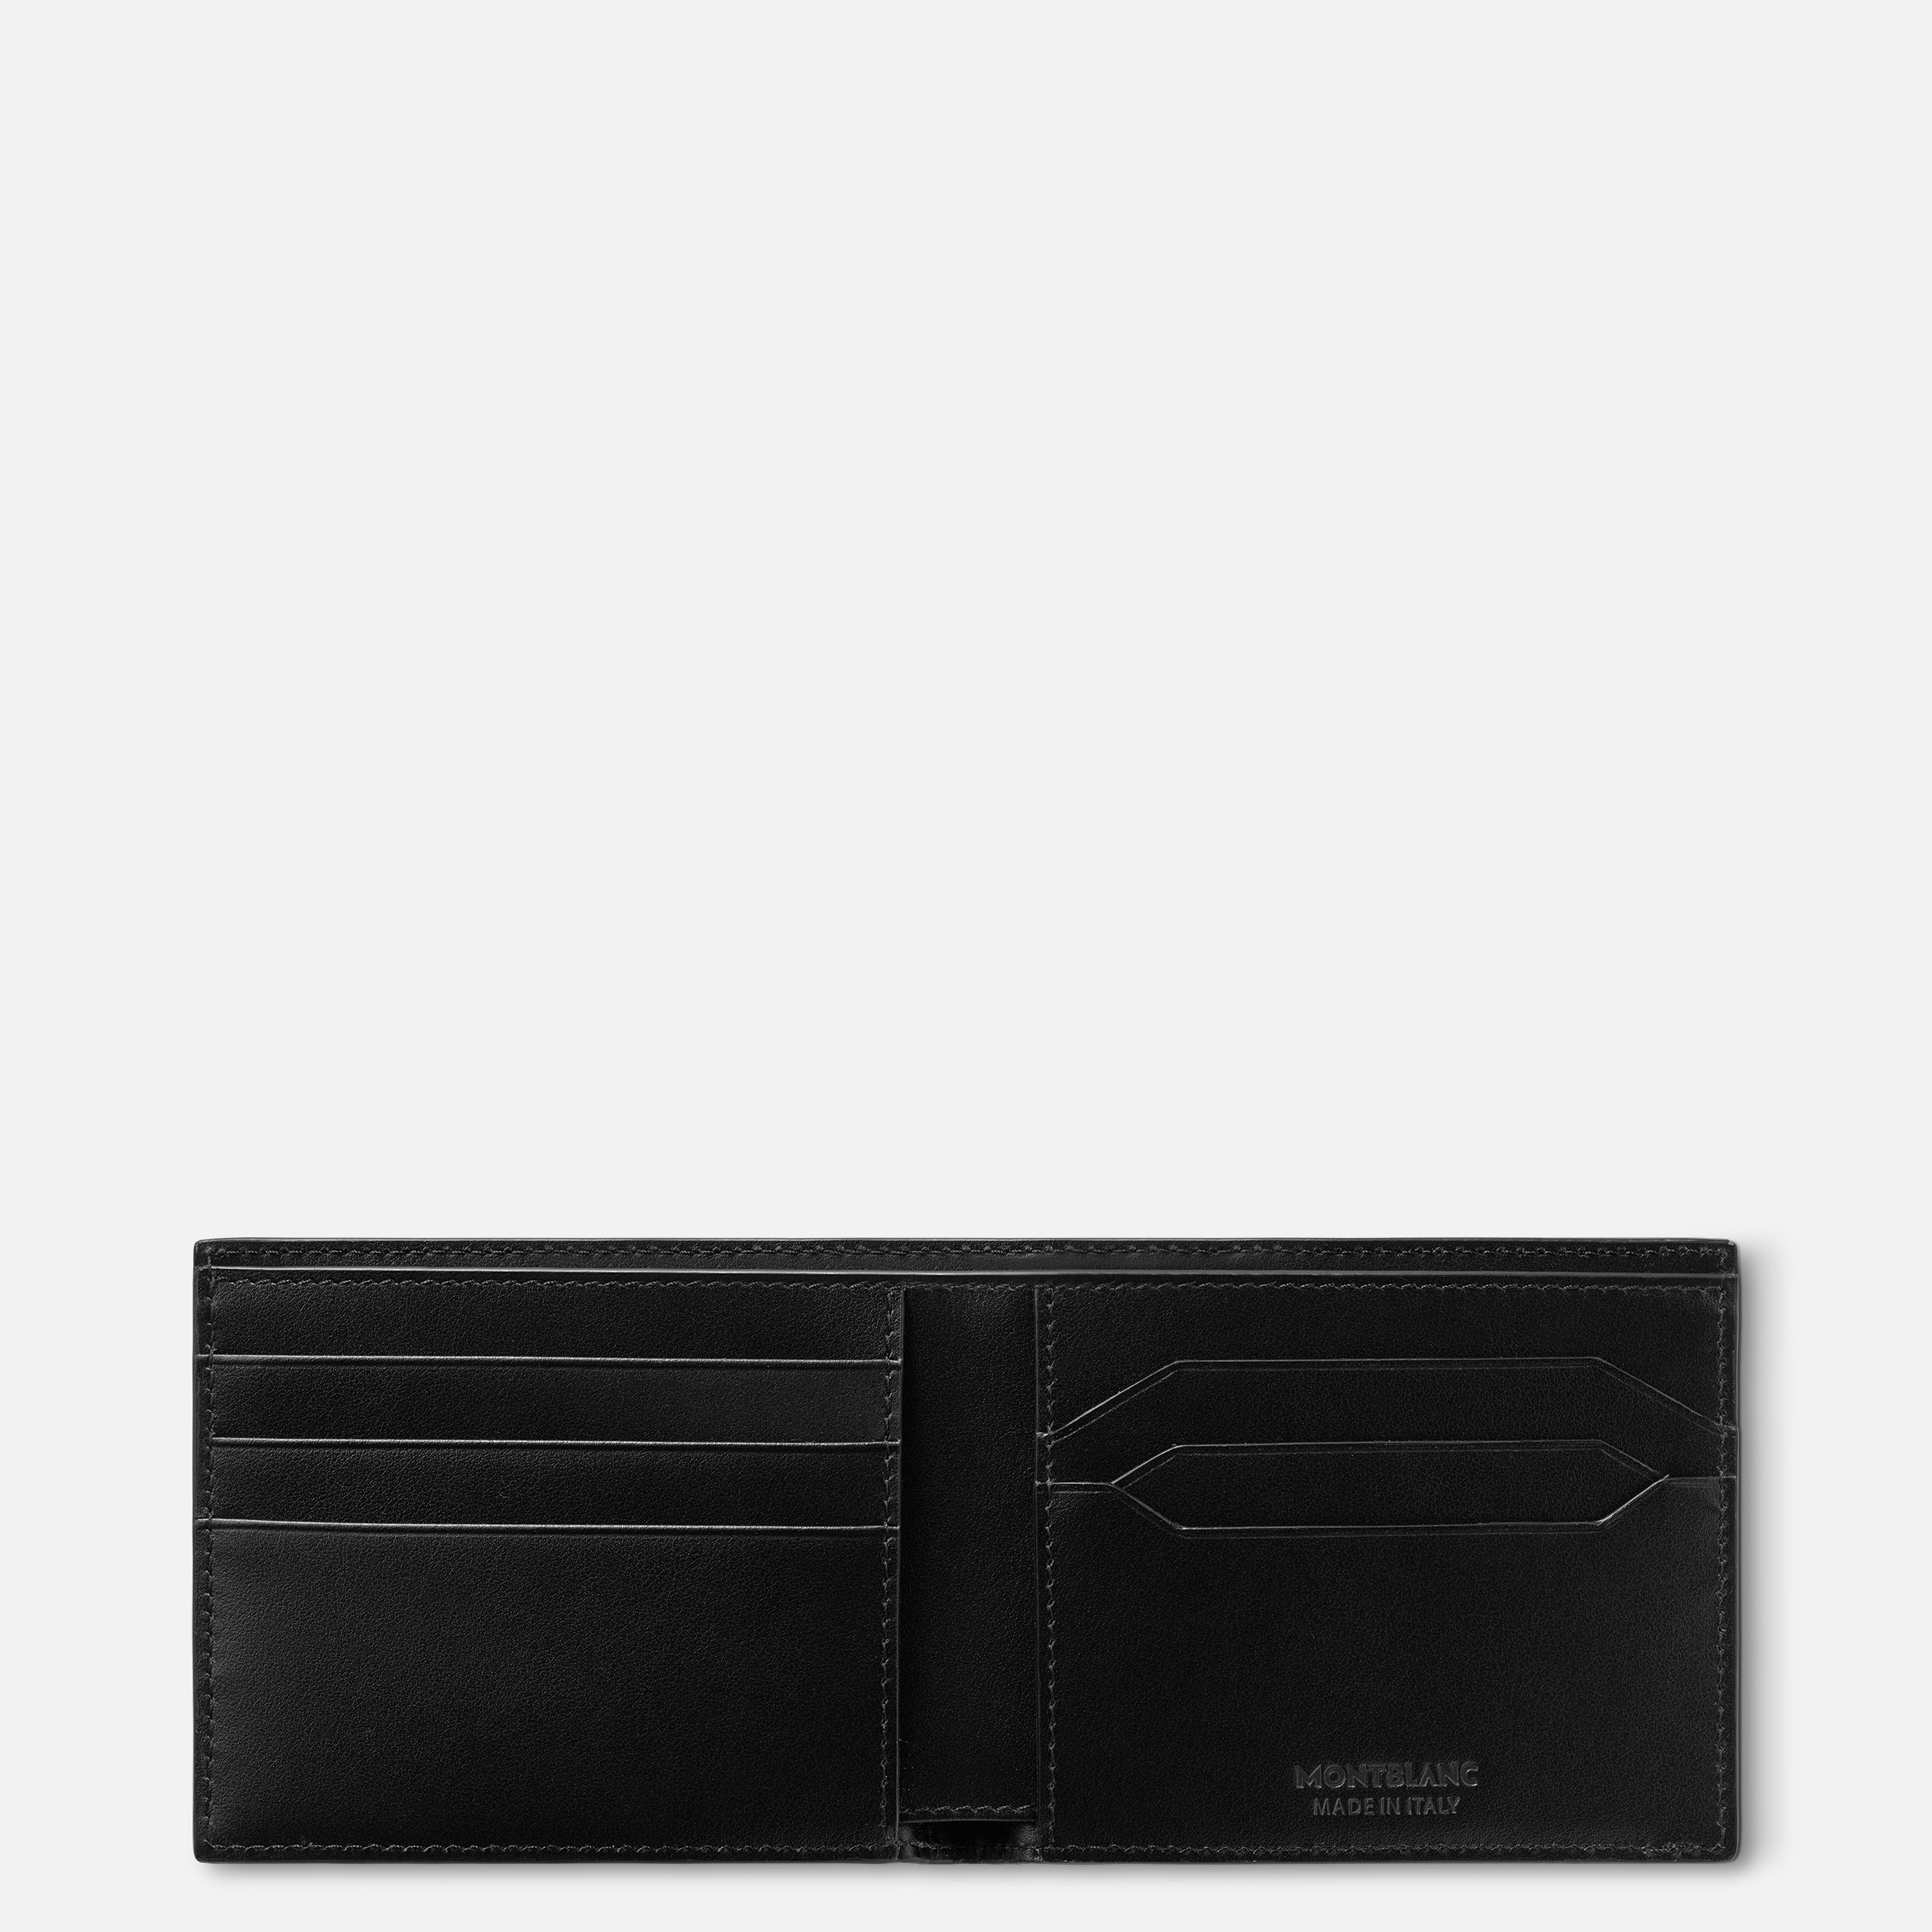 Montblanc Extreme 3.0 wallet 6cc - 4